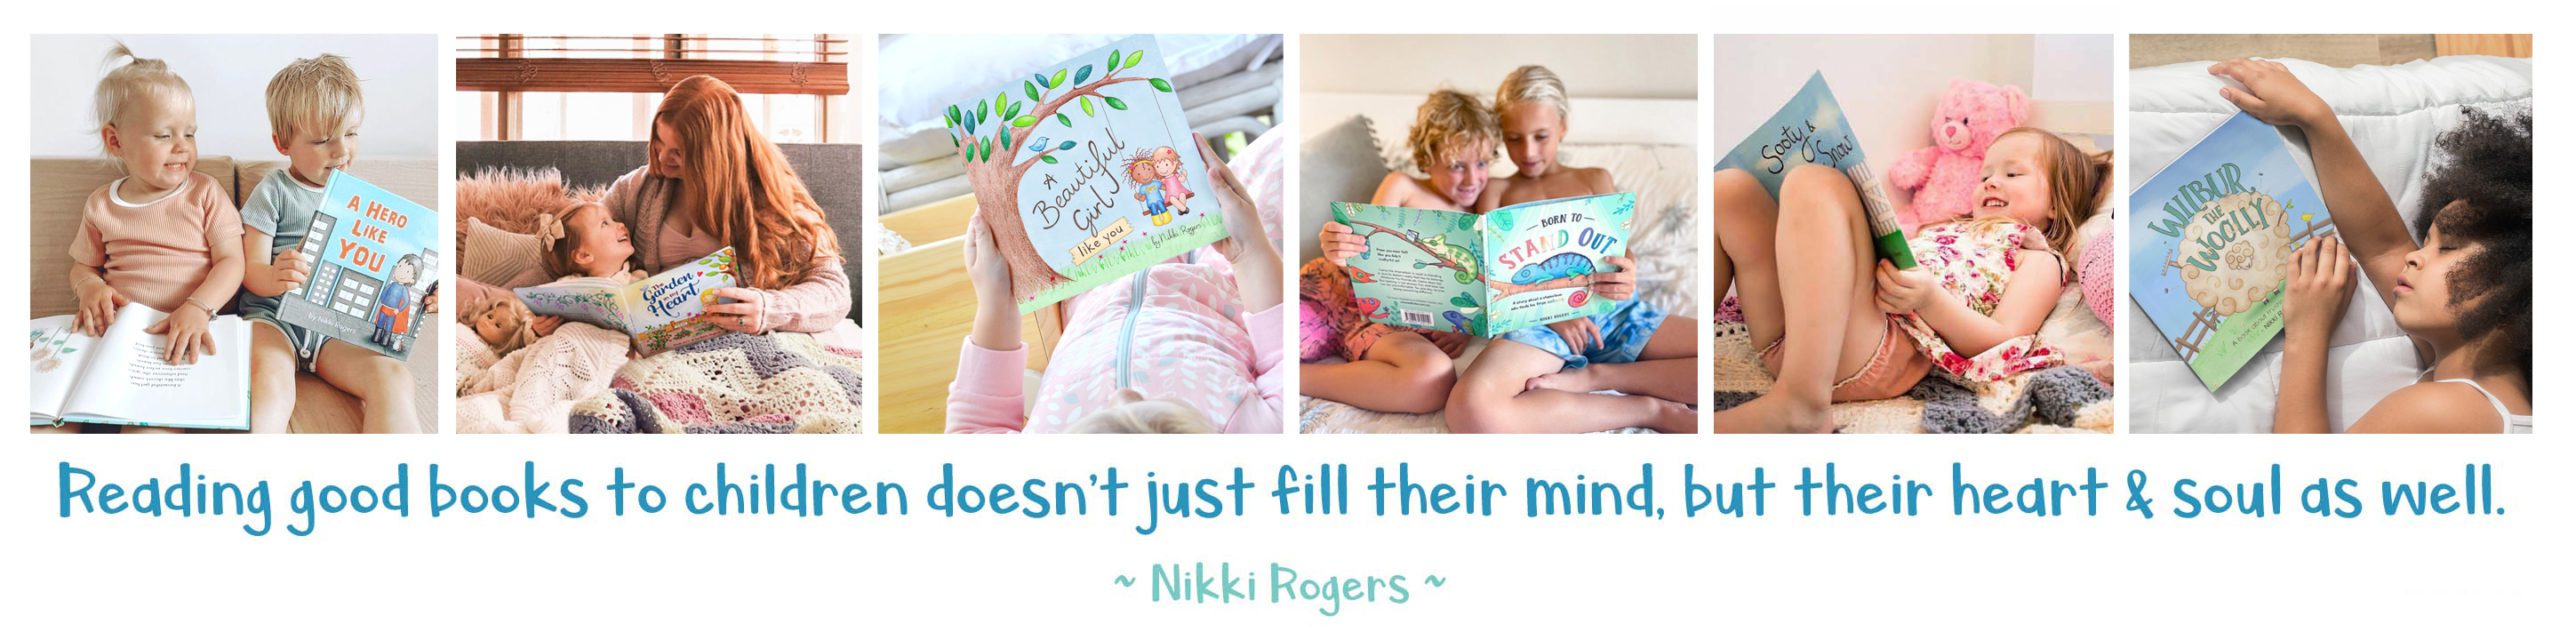 Children's Book by Nikki Rogers